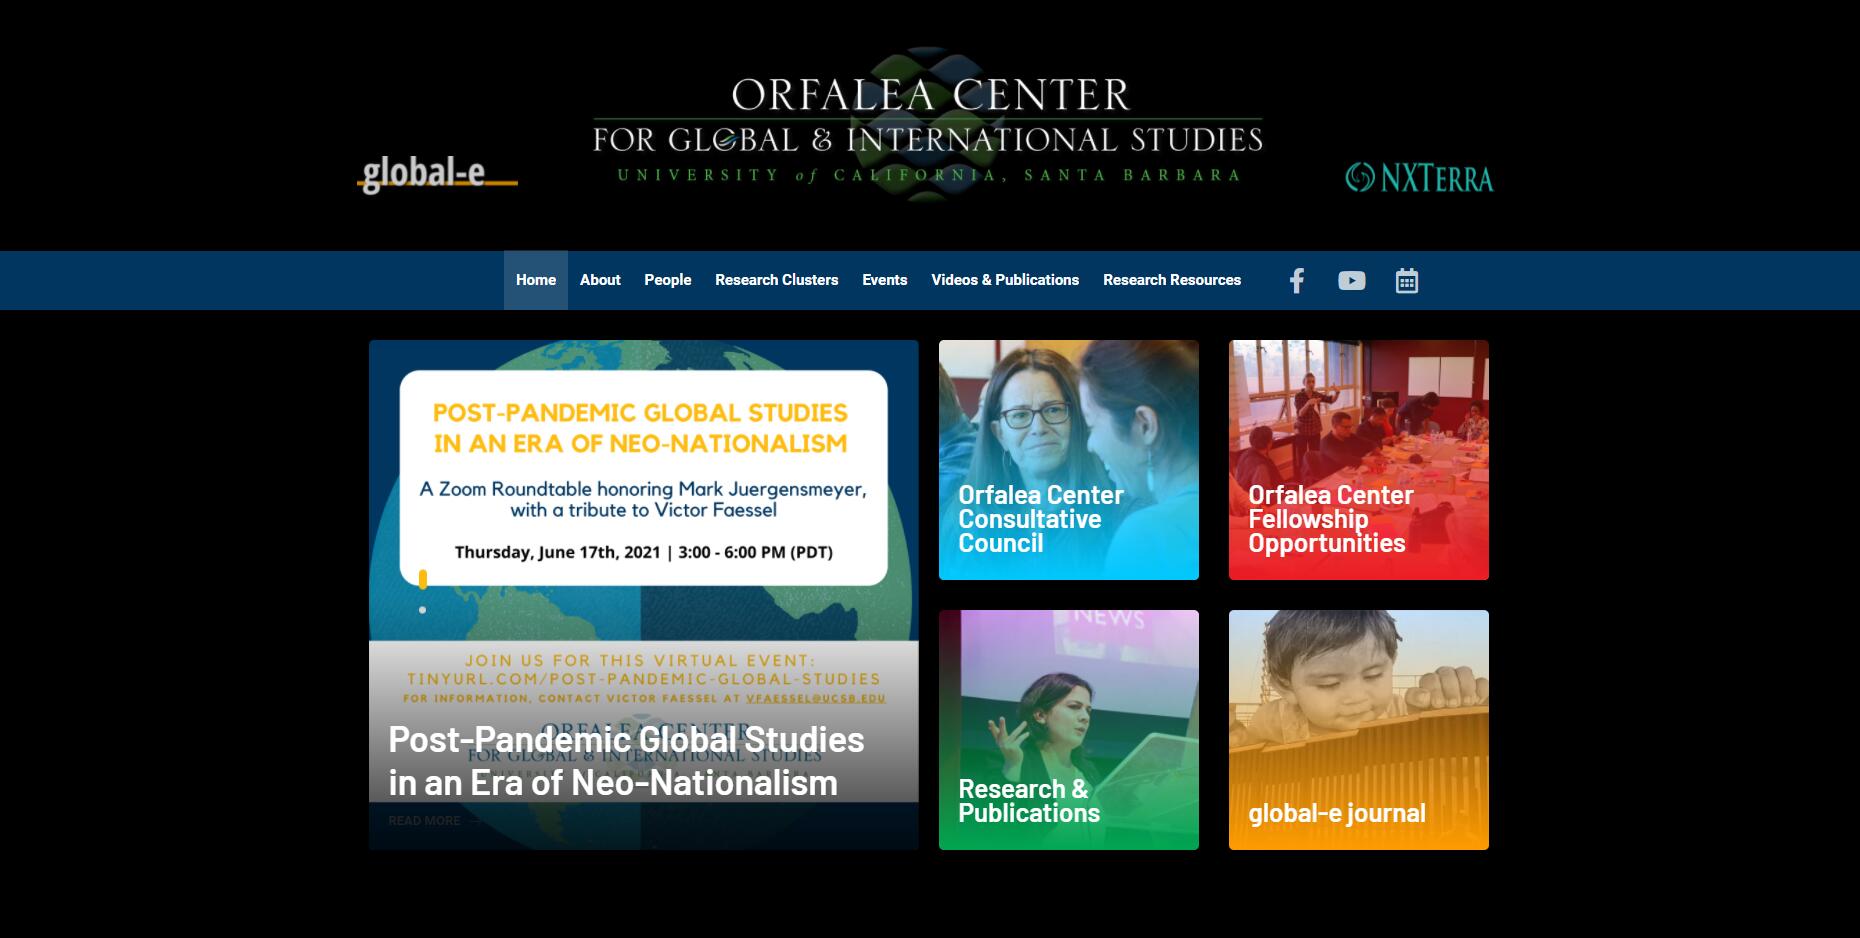 UCSB Orfalea Center for Global & International Studies